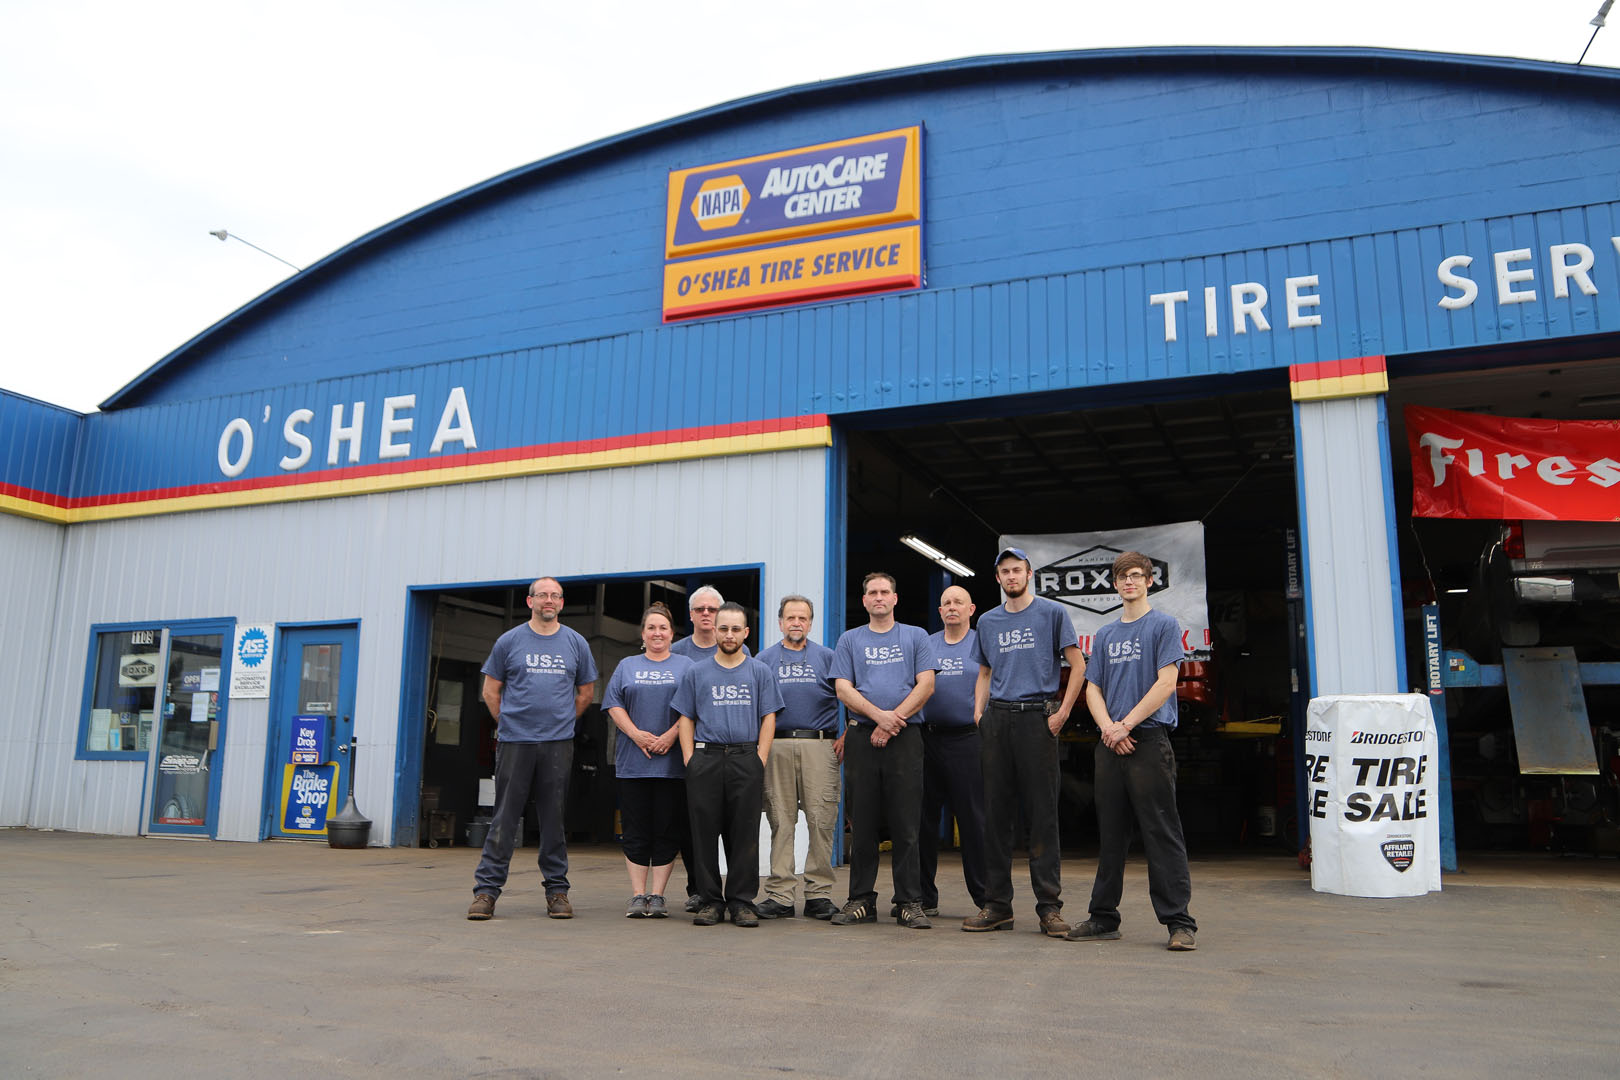 O'shea Tire & Service Center